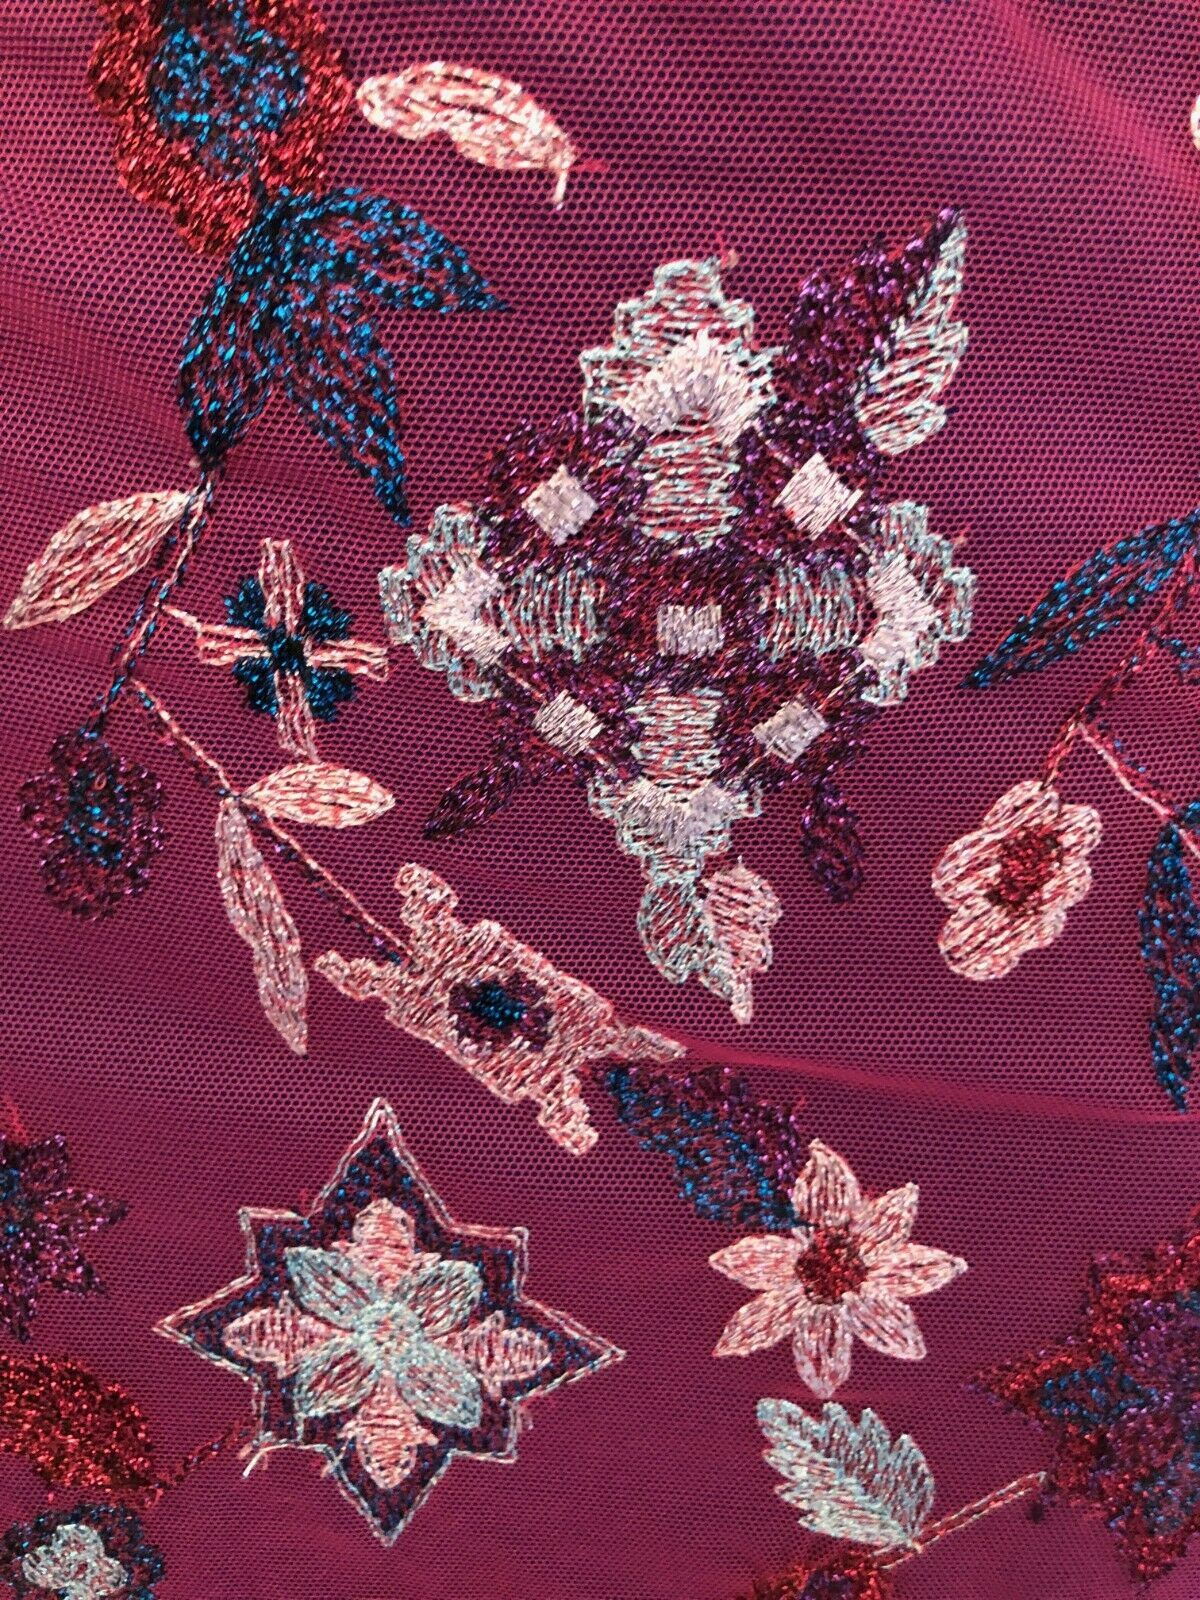 Bazar Christian Lacroix Vintage Purple Mesh Embroidered Sparkly Mini Skirt UK 8 US 4 EU 3436 Timeless Fashions